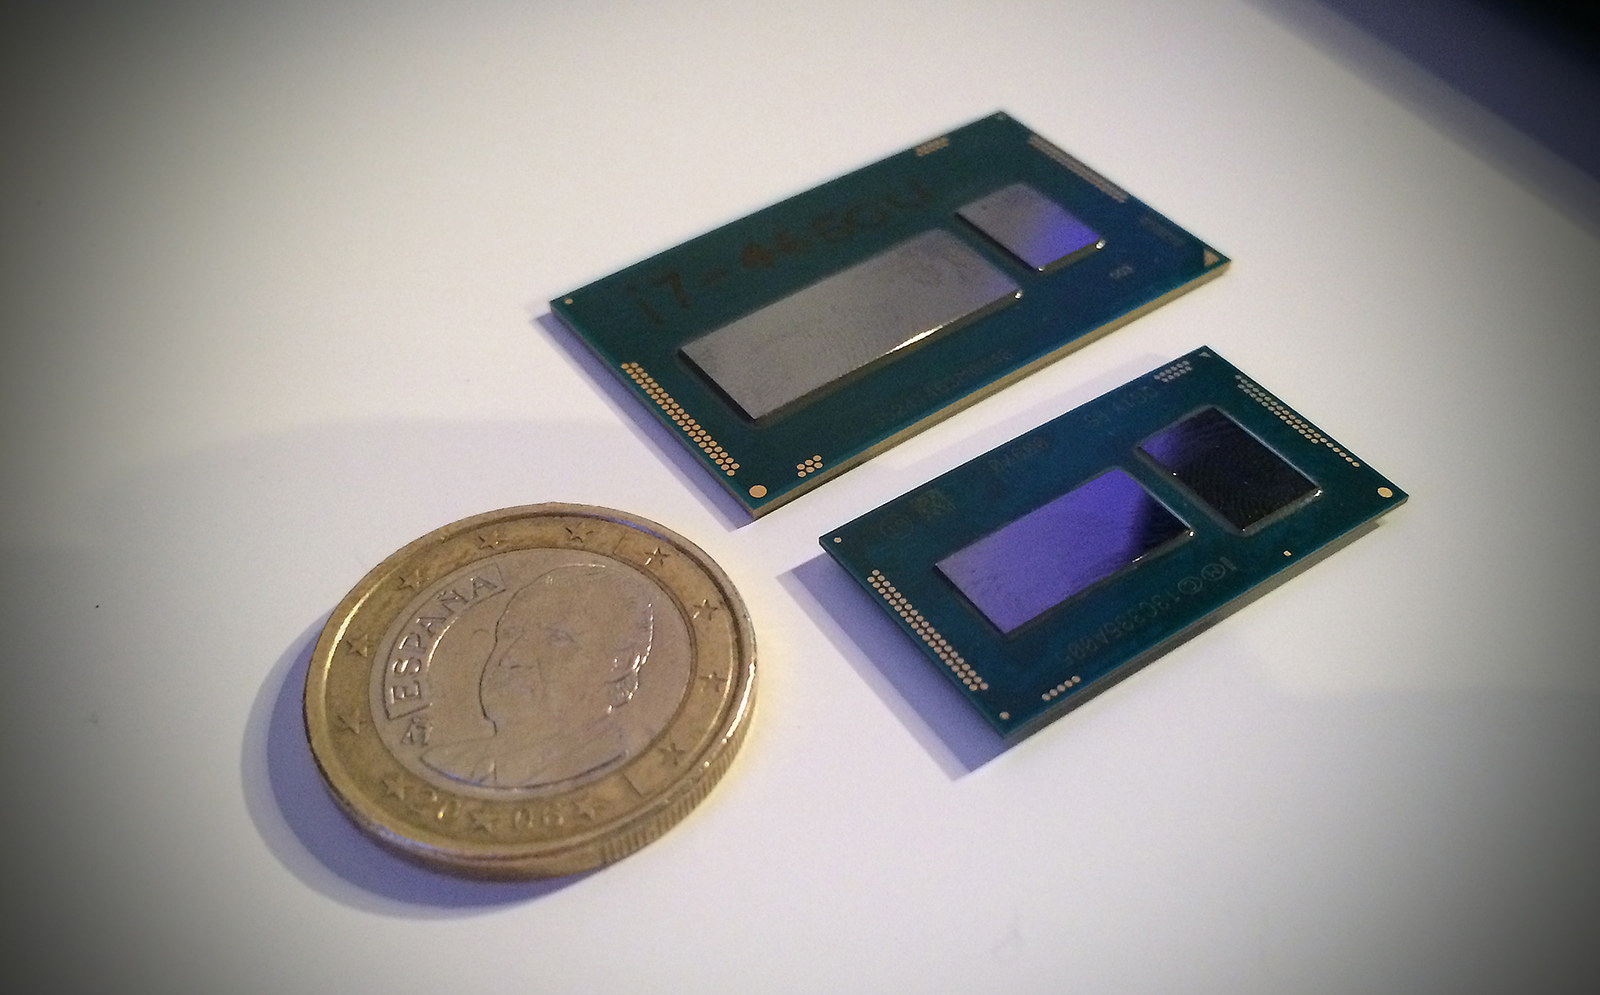 Intel Core and Core M processoers